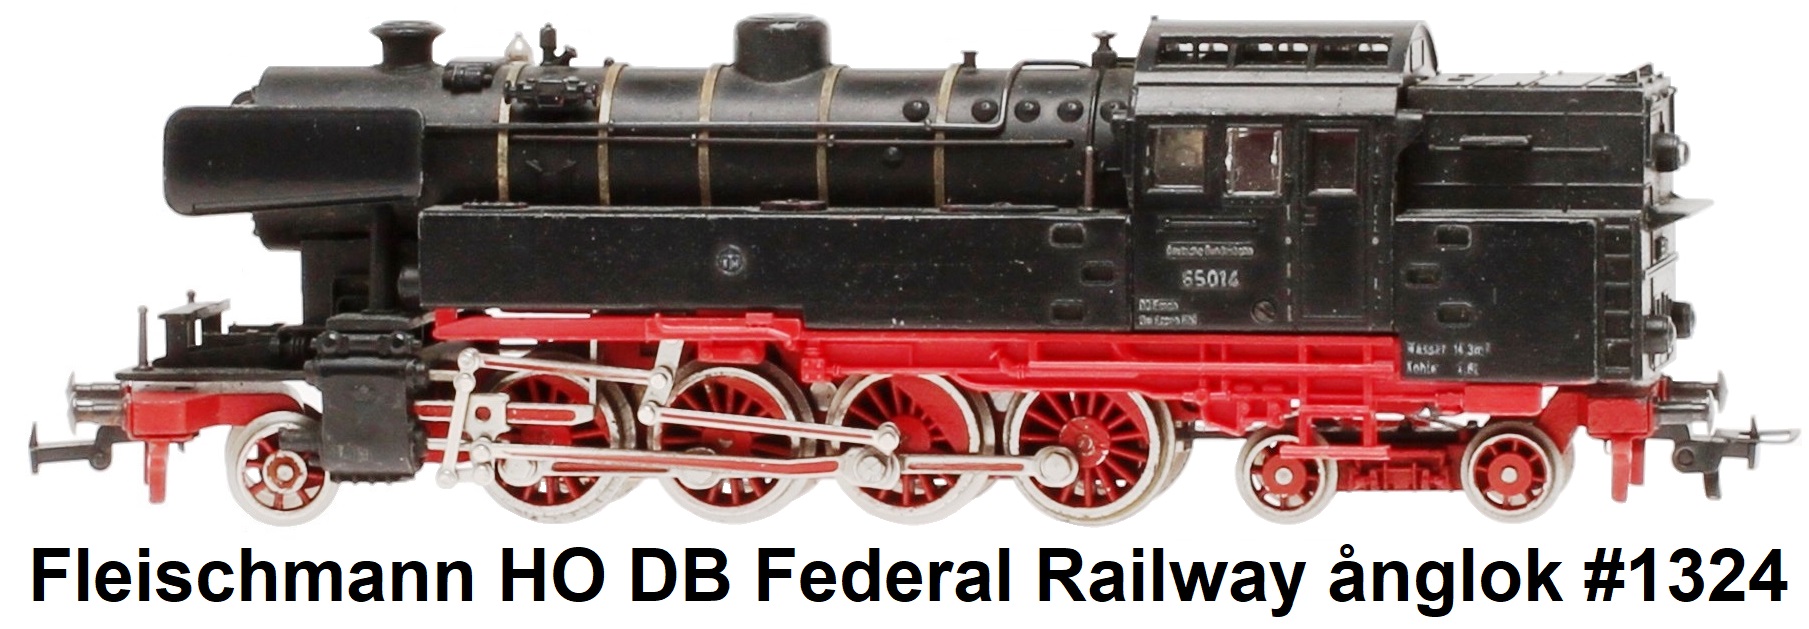 Fleischmann HO Deustche Bundesbahn ånglok #1324 2-8-4 Tank engine